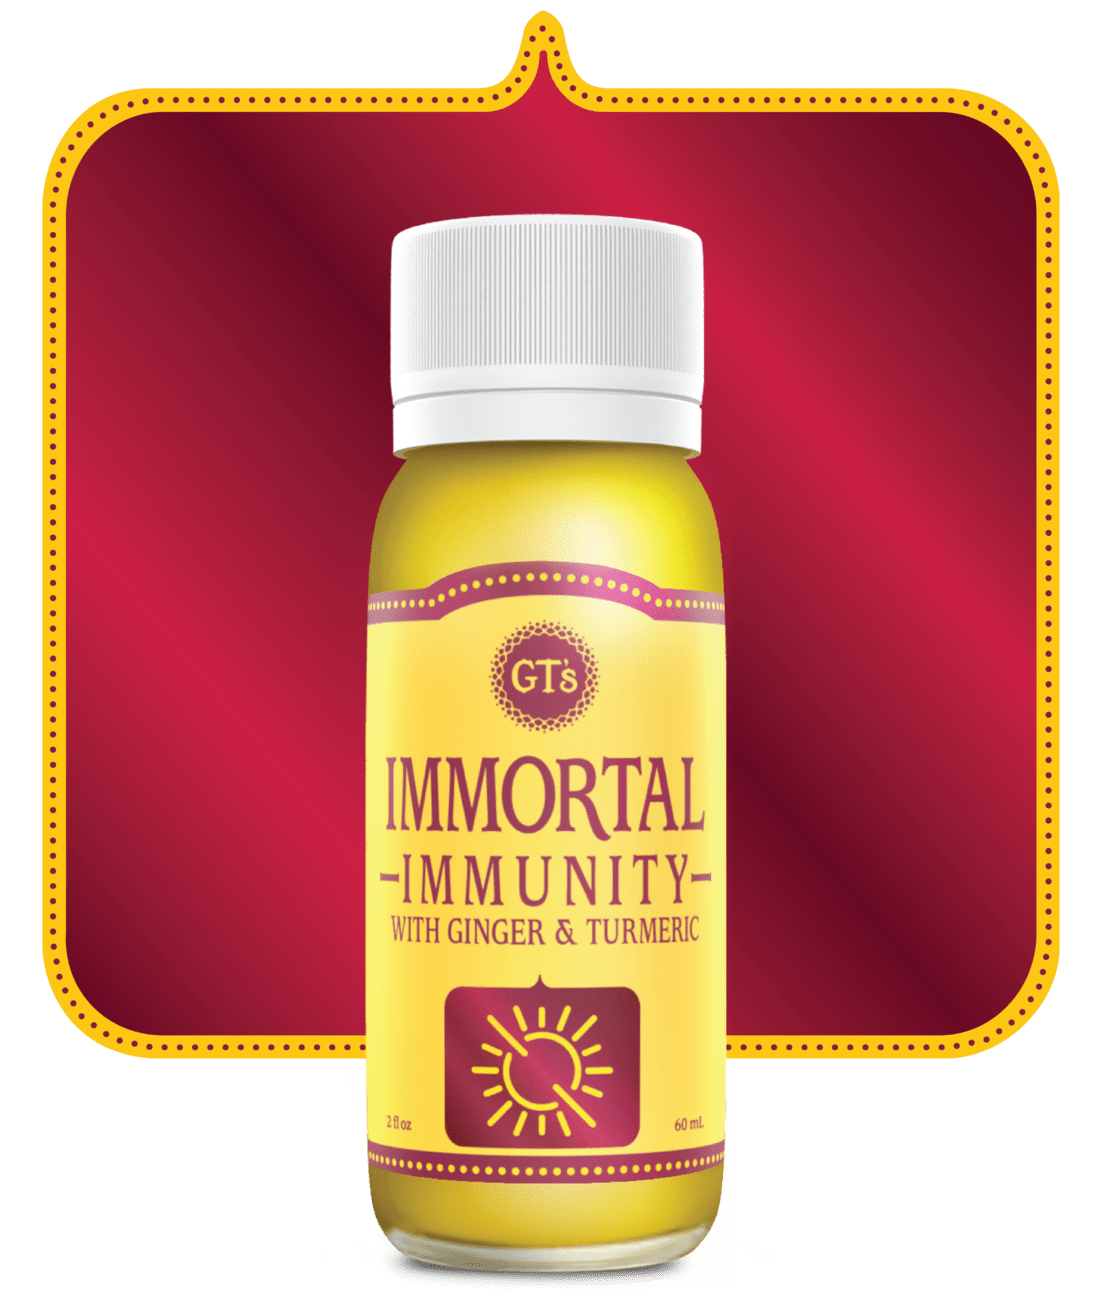 GT's IMMORTAL Immunity Bottle Render